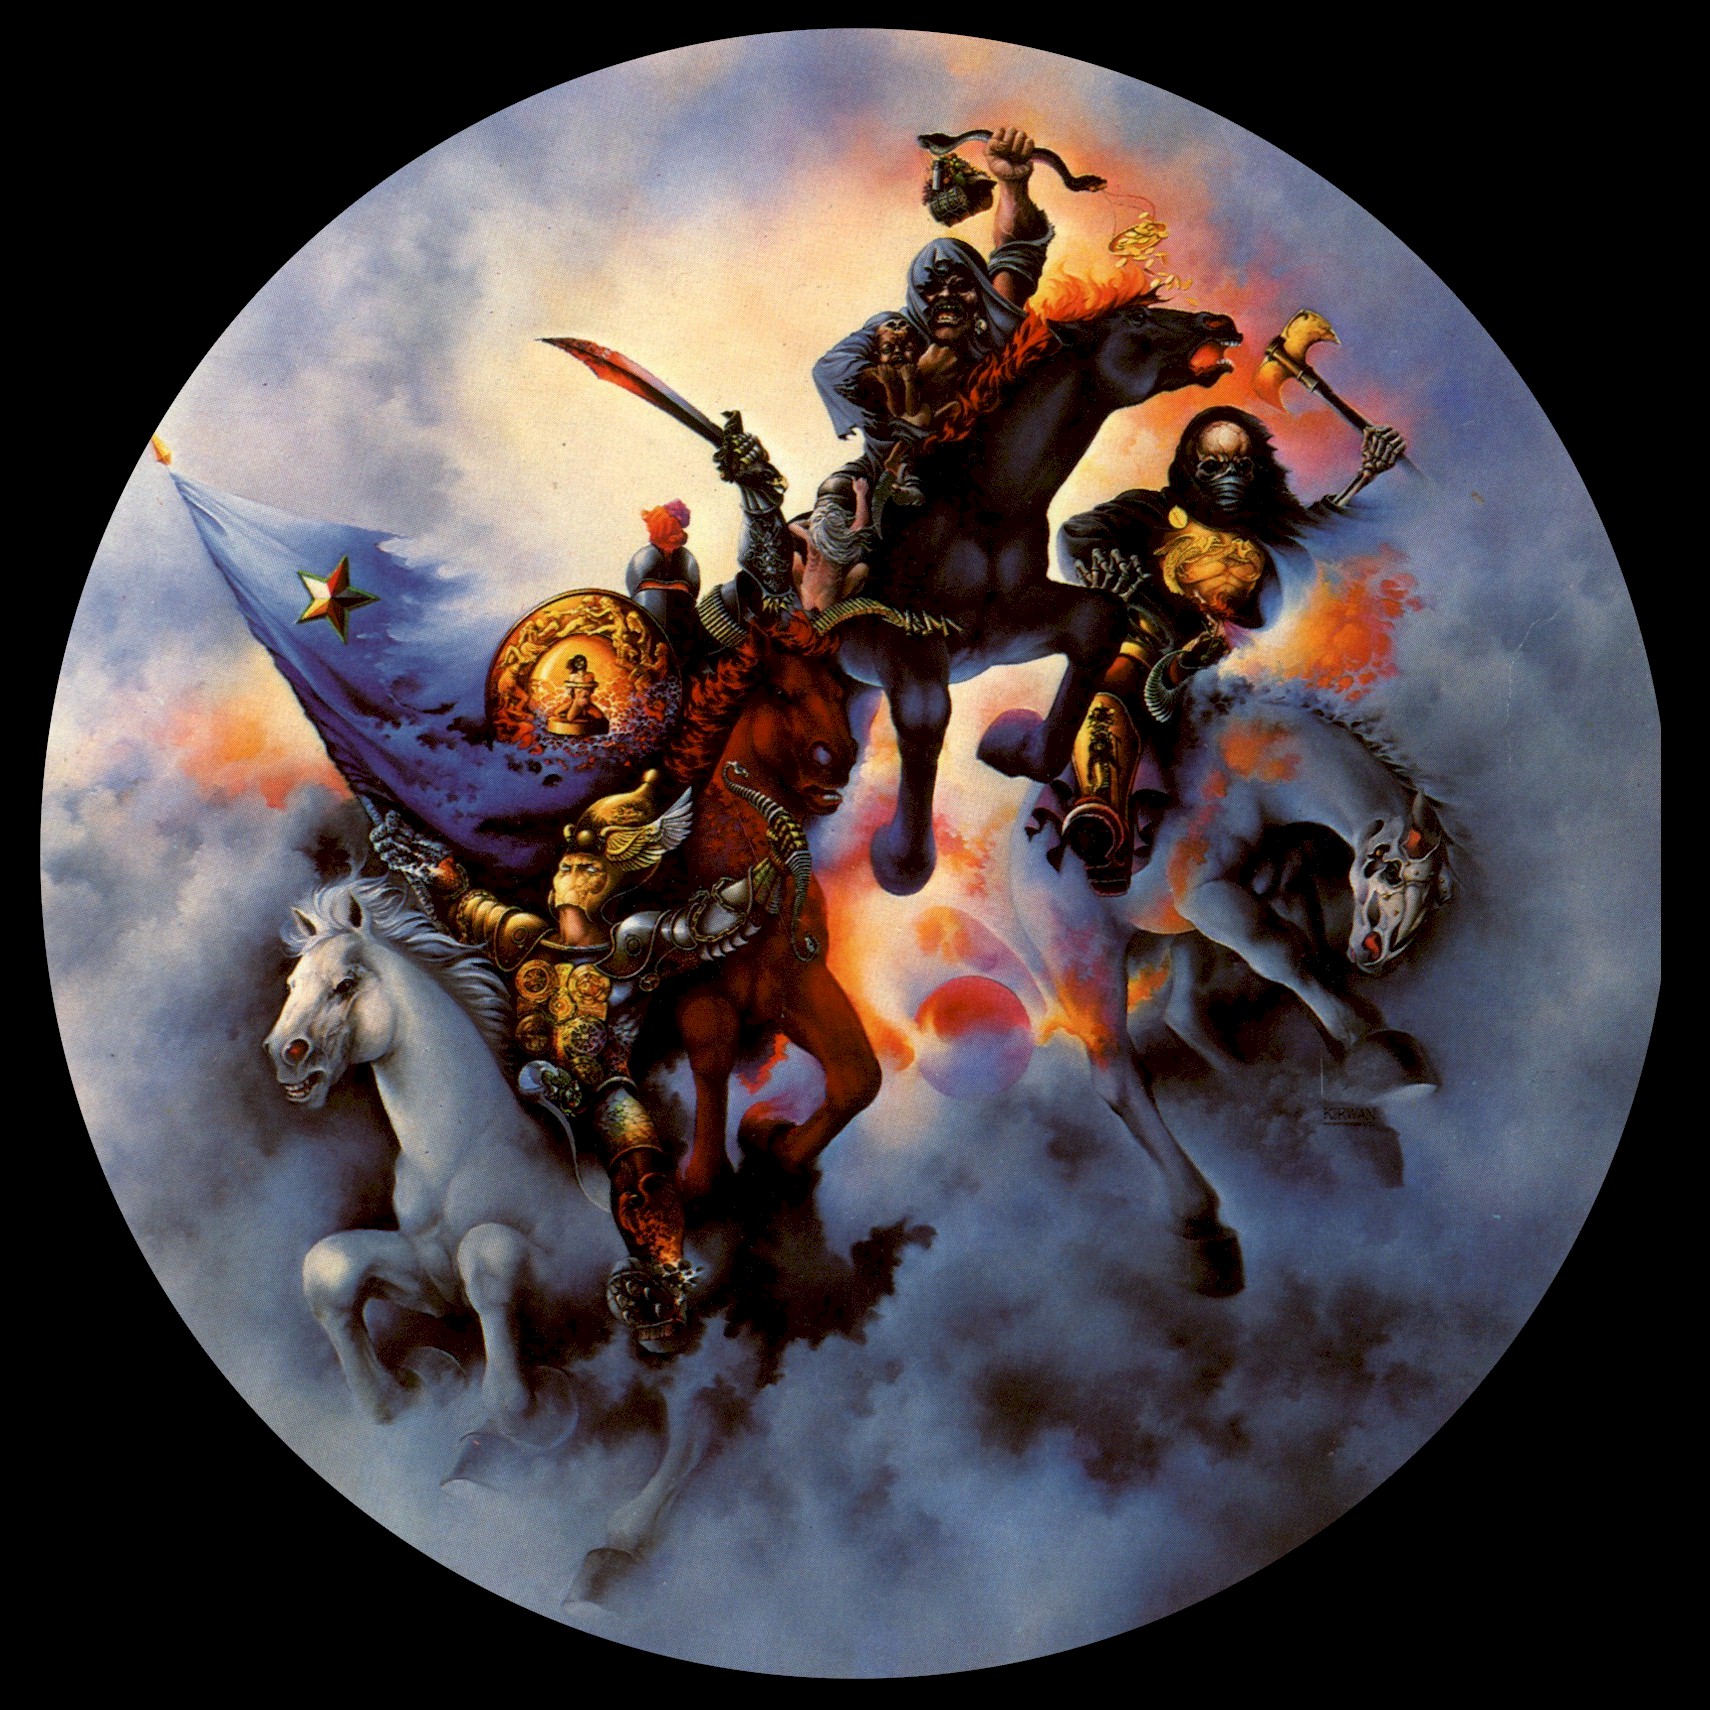 Horsemen of the Apocalypse desktop wallpaper - captivating and intense.